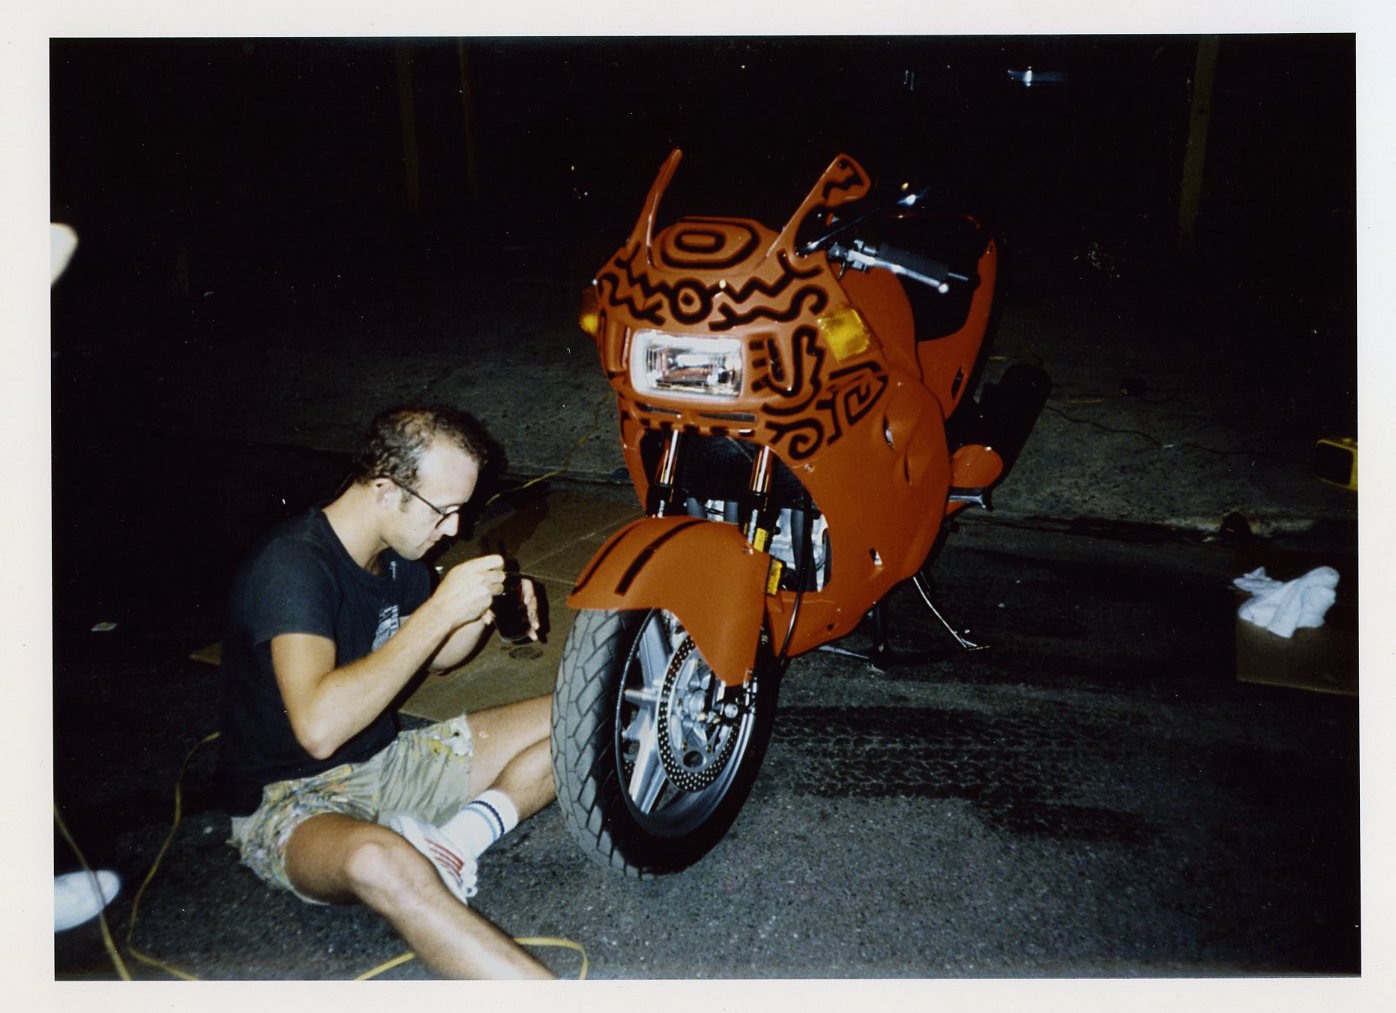 1987 Honda CBR1000F Hurricane motorcycle (Keith Haring Foundation/Petersen Automotive Museum)